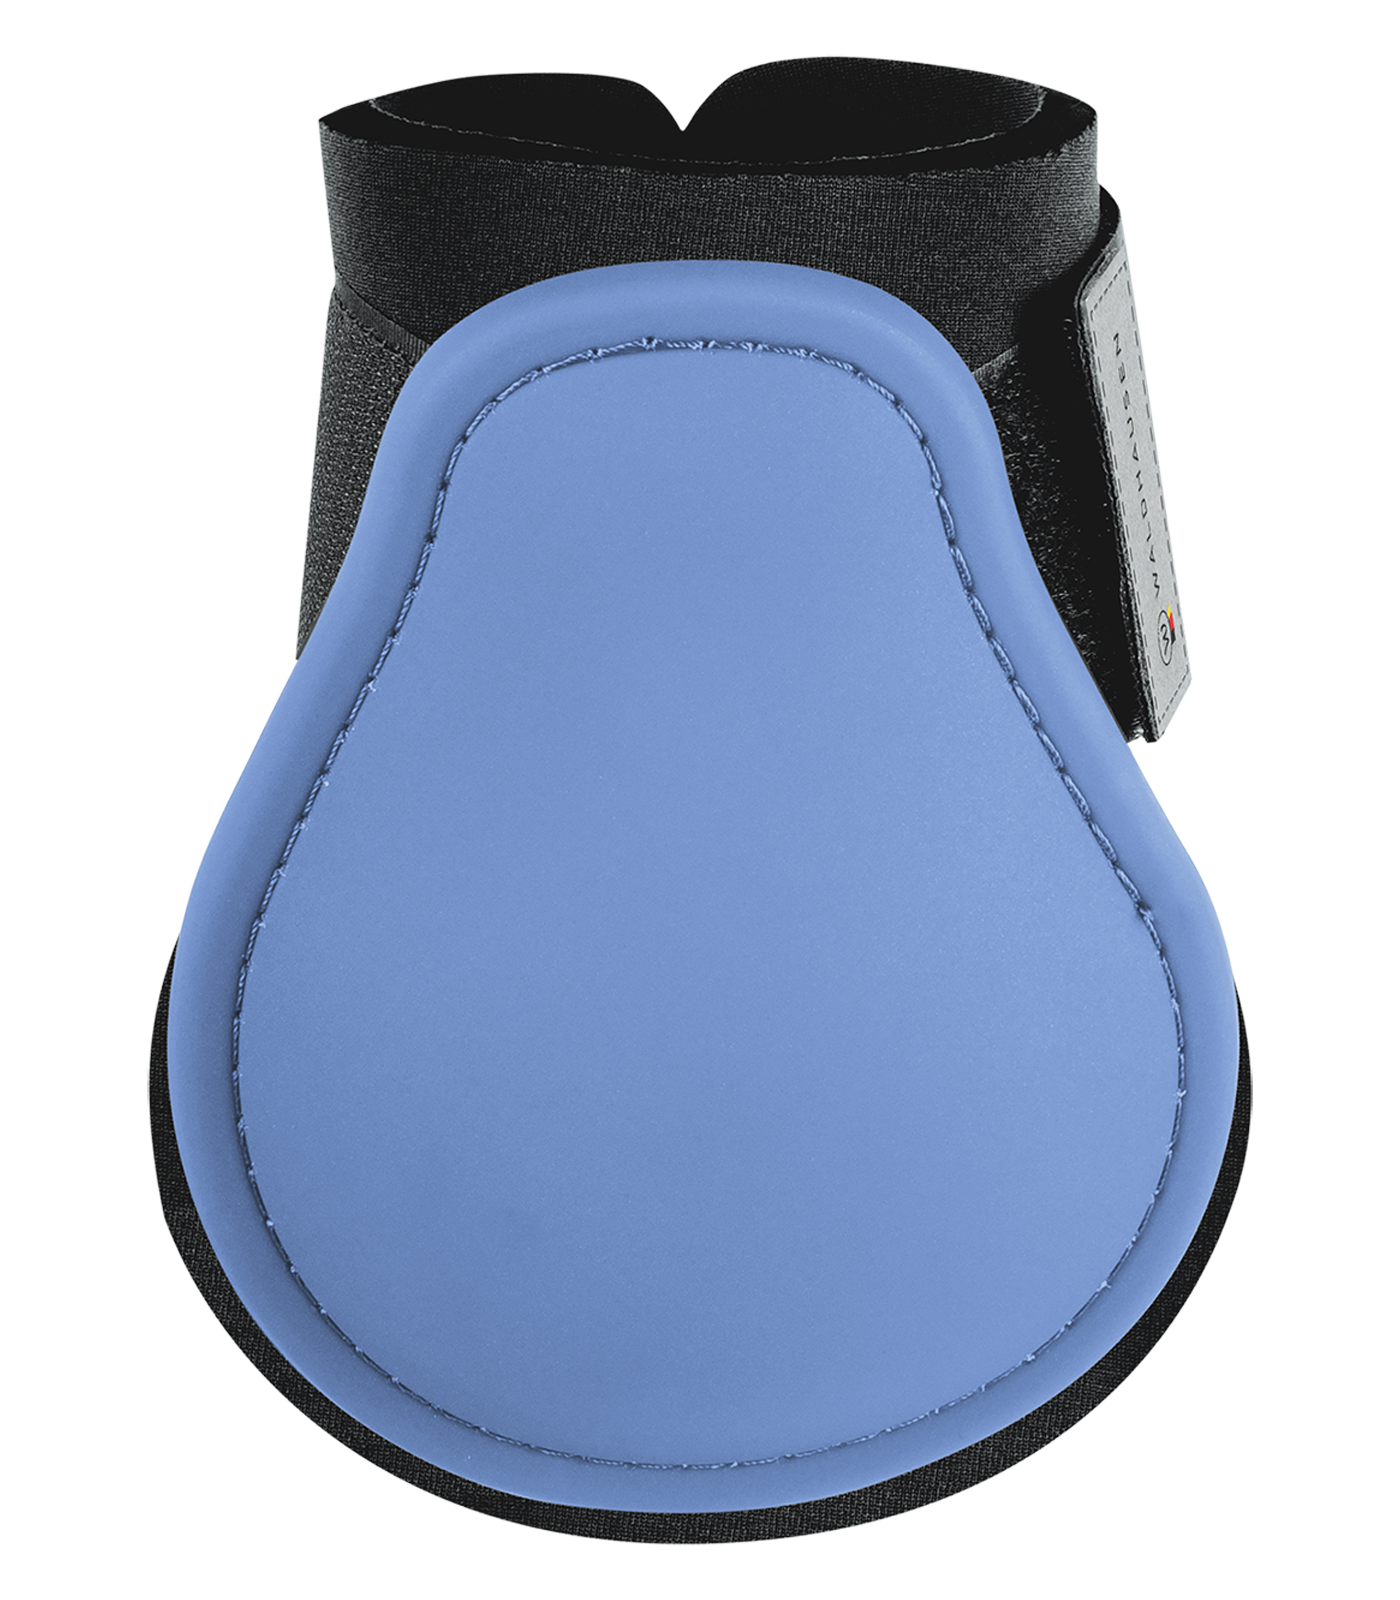 Basic Hind Boots, pair sky blue